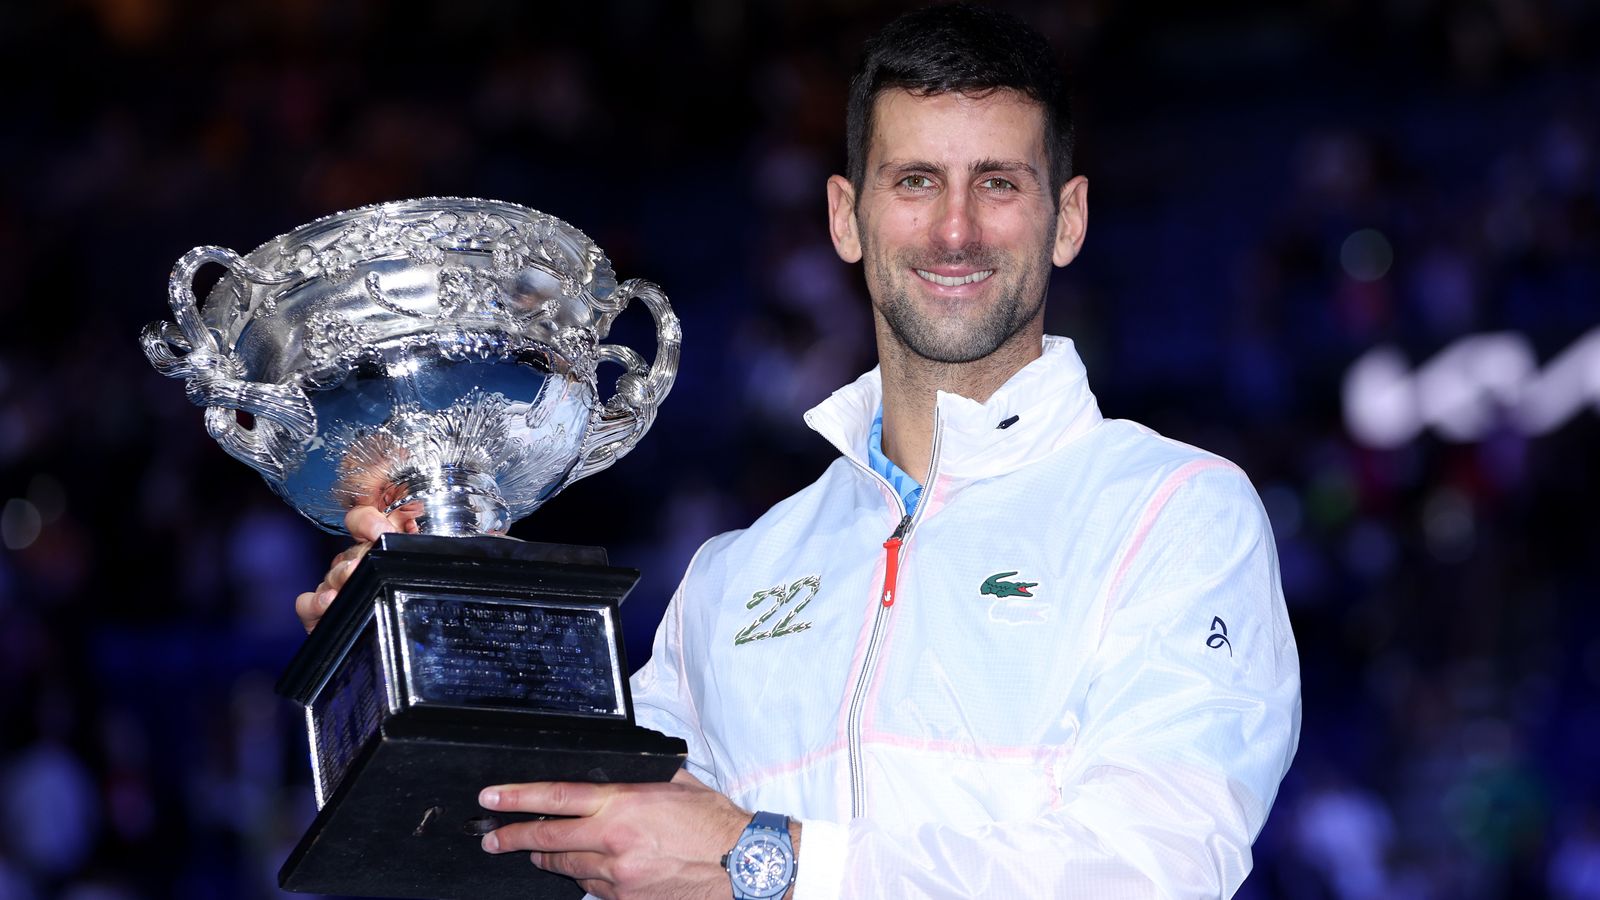 Australian Open Novak Djokovic wins his 10th title in Melbourne to